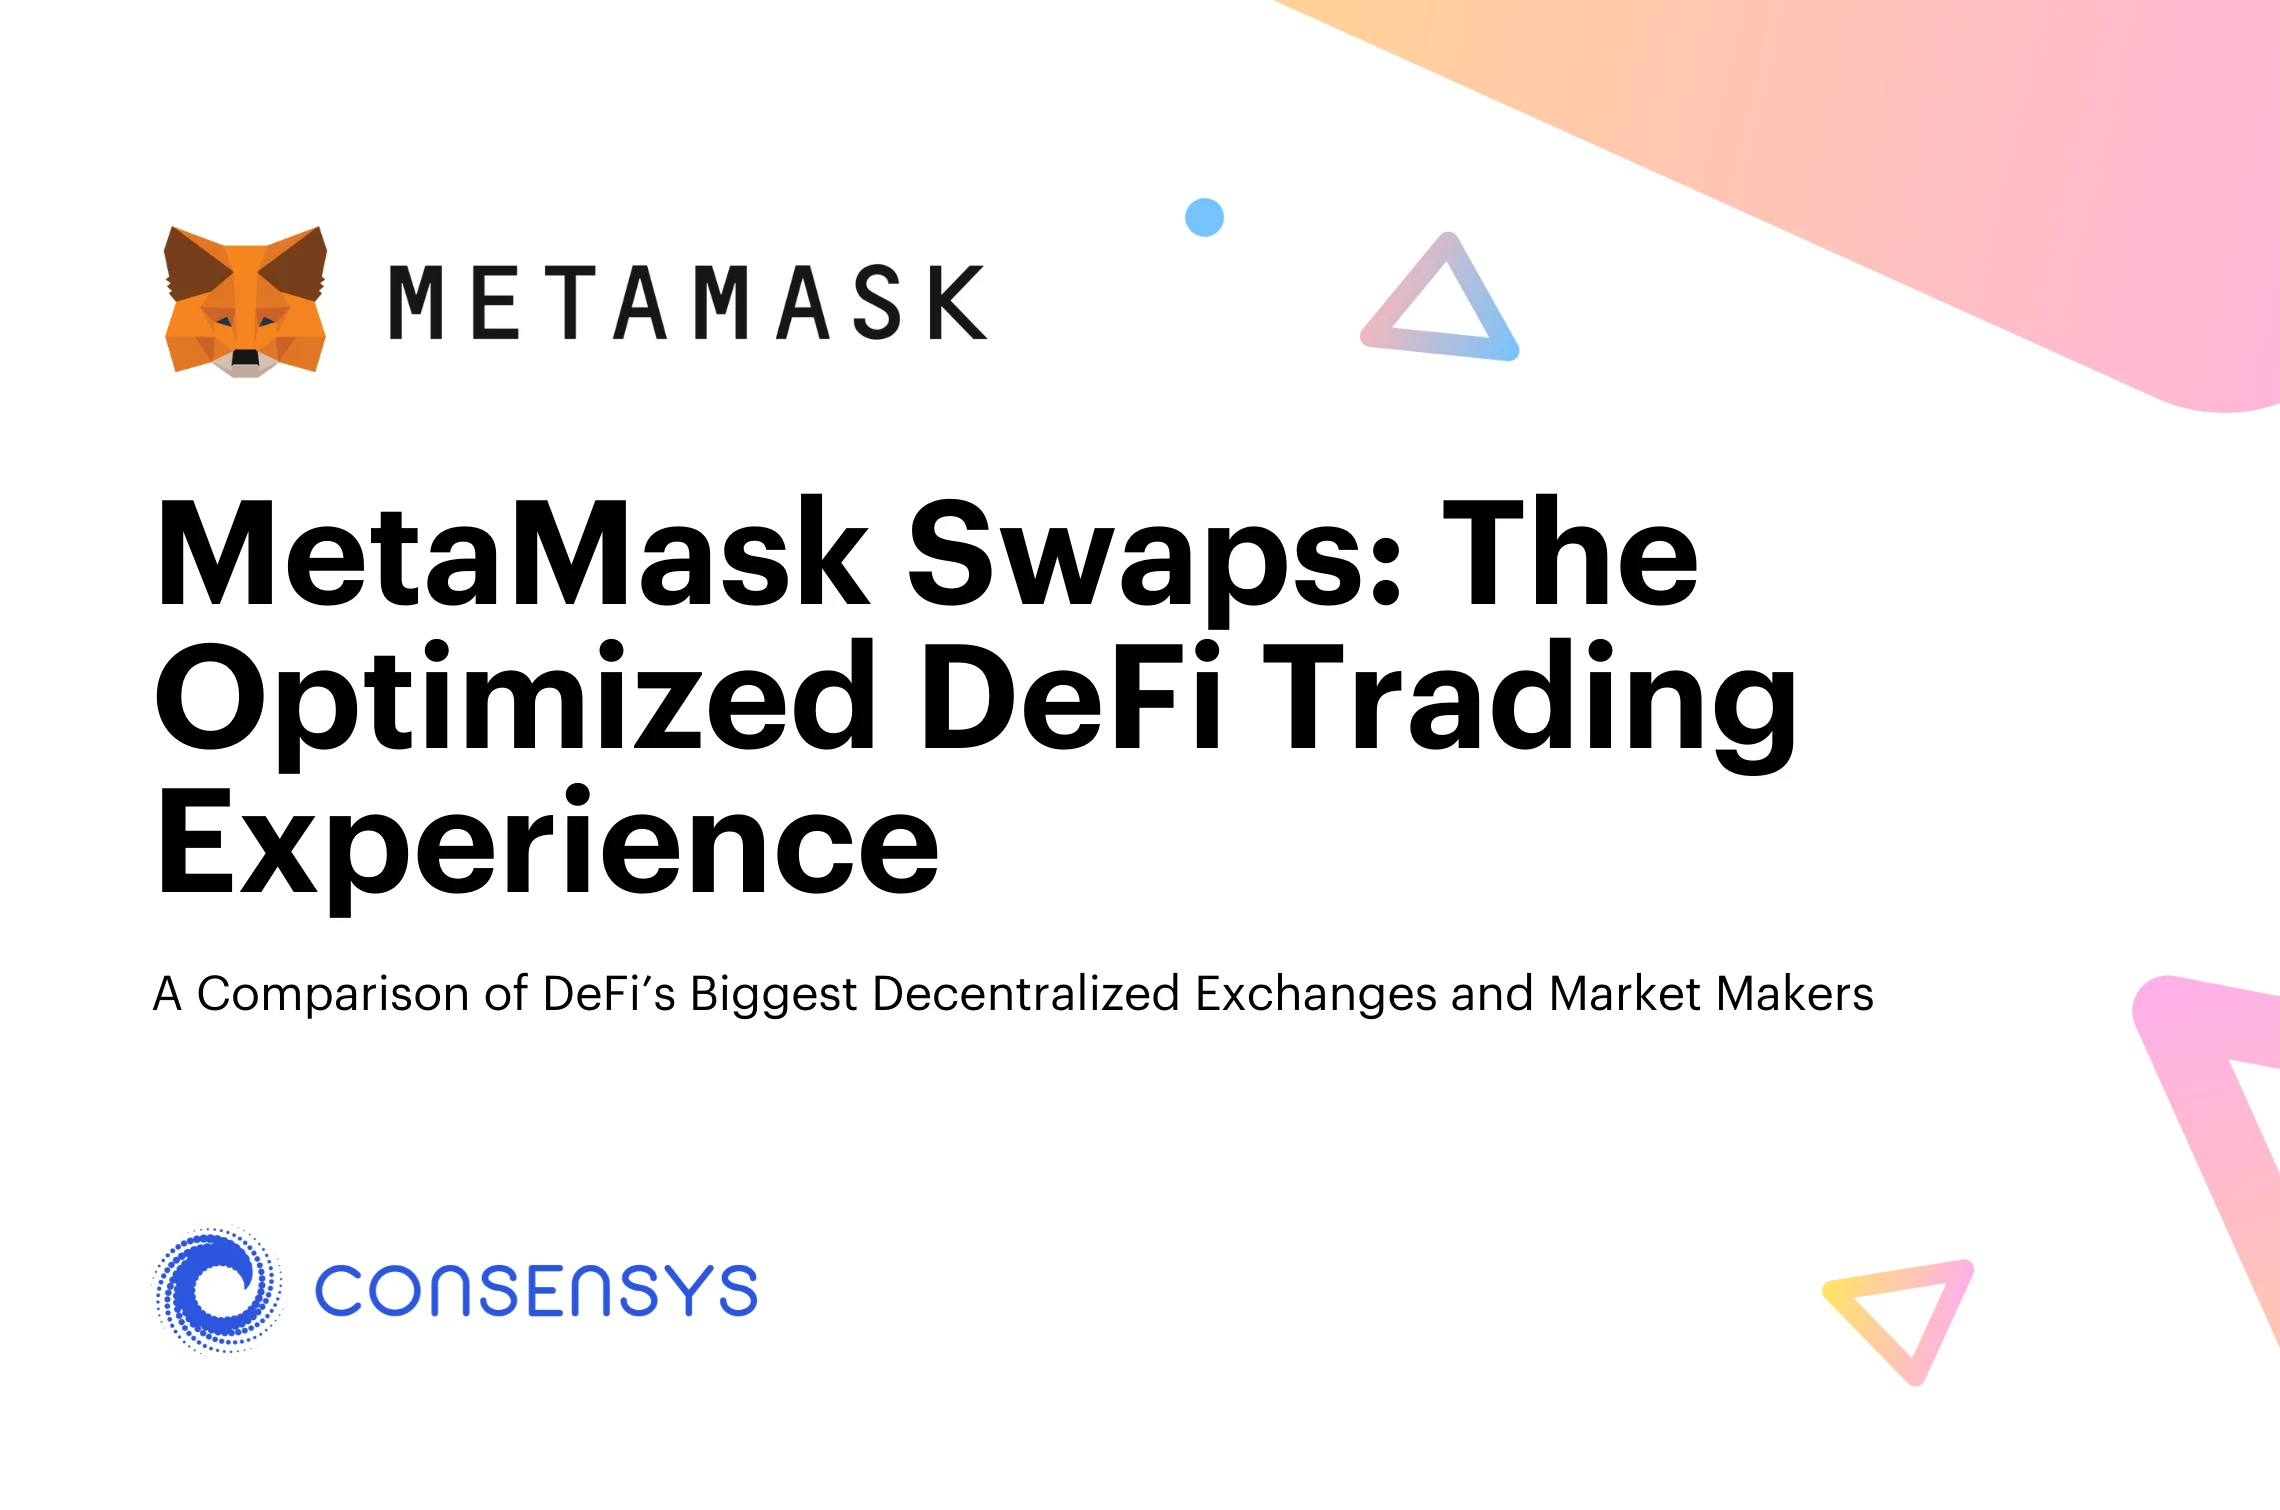 MetaMask Swaps: The Optimized DeFi Trading Experience